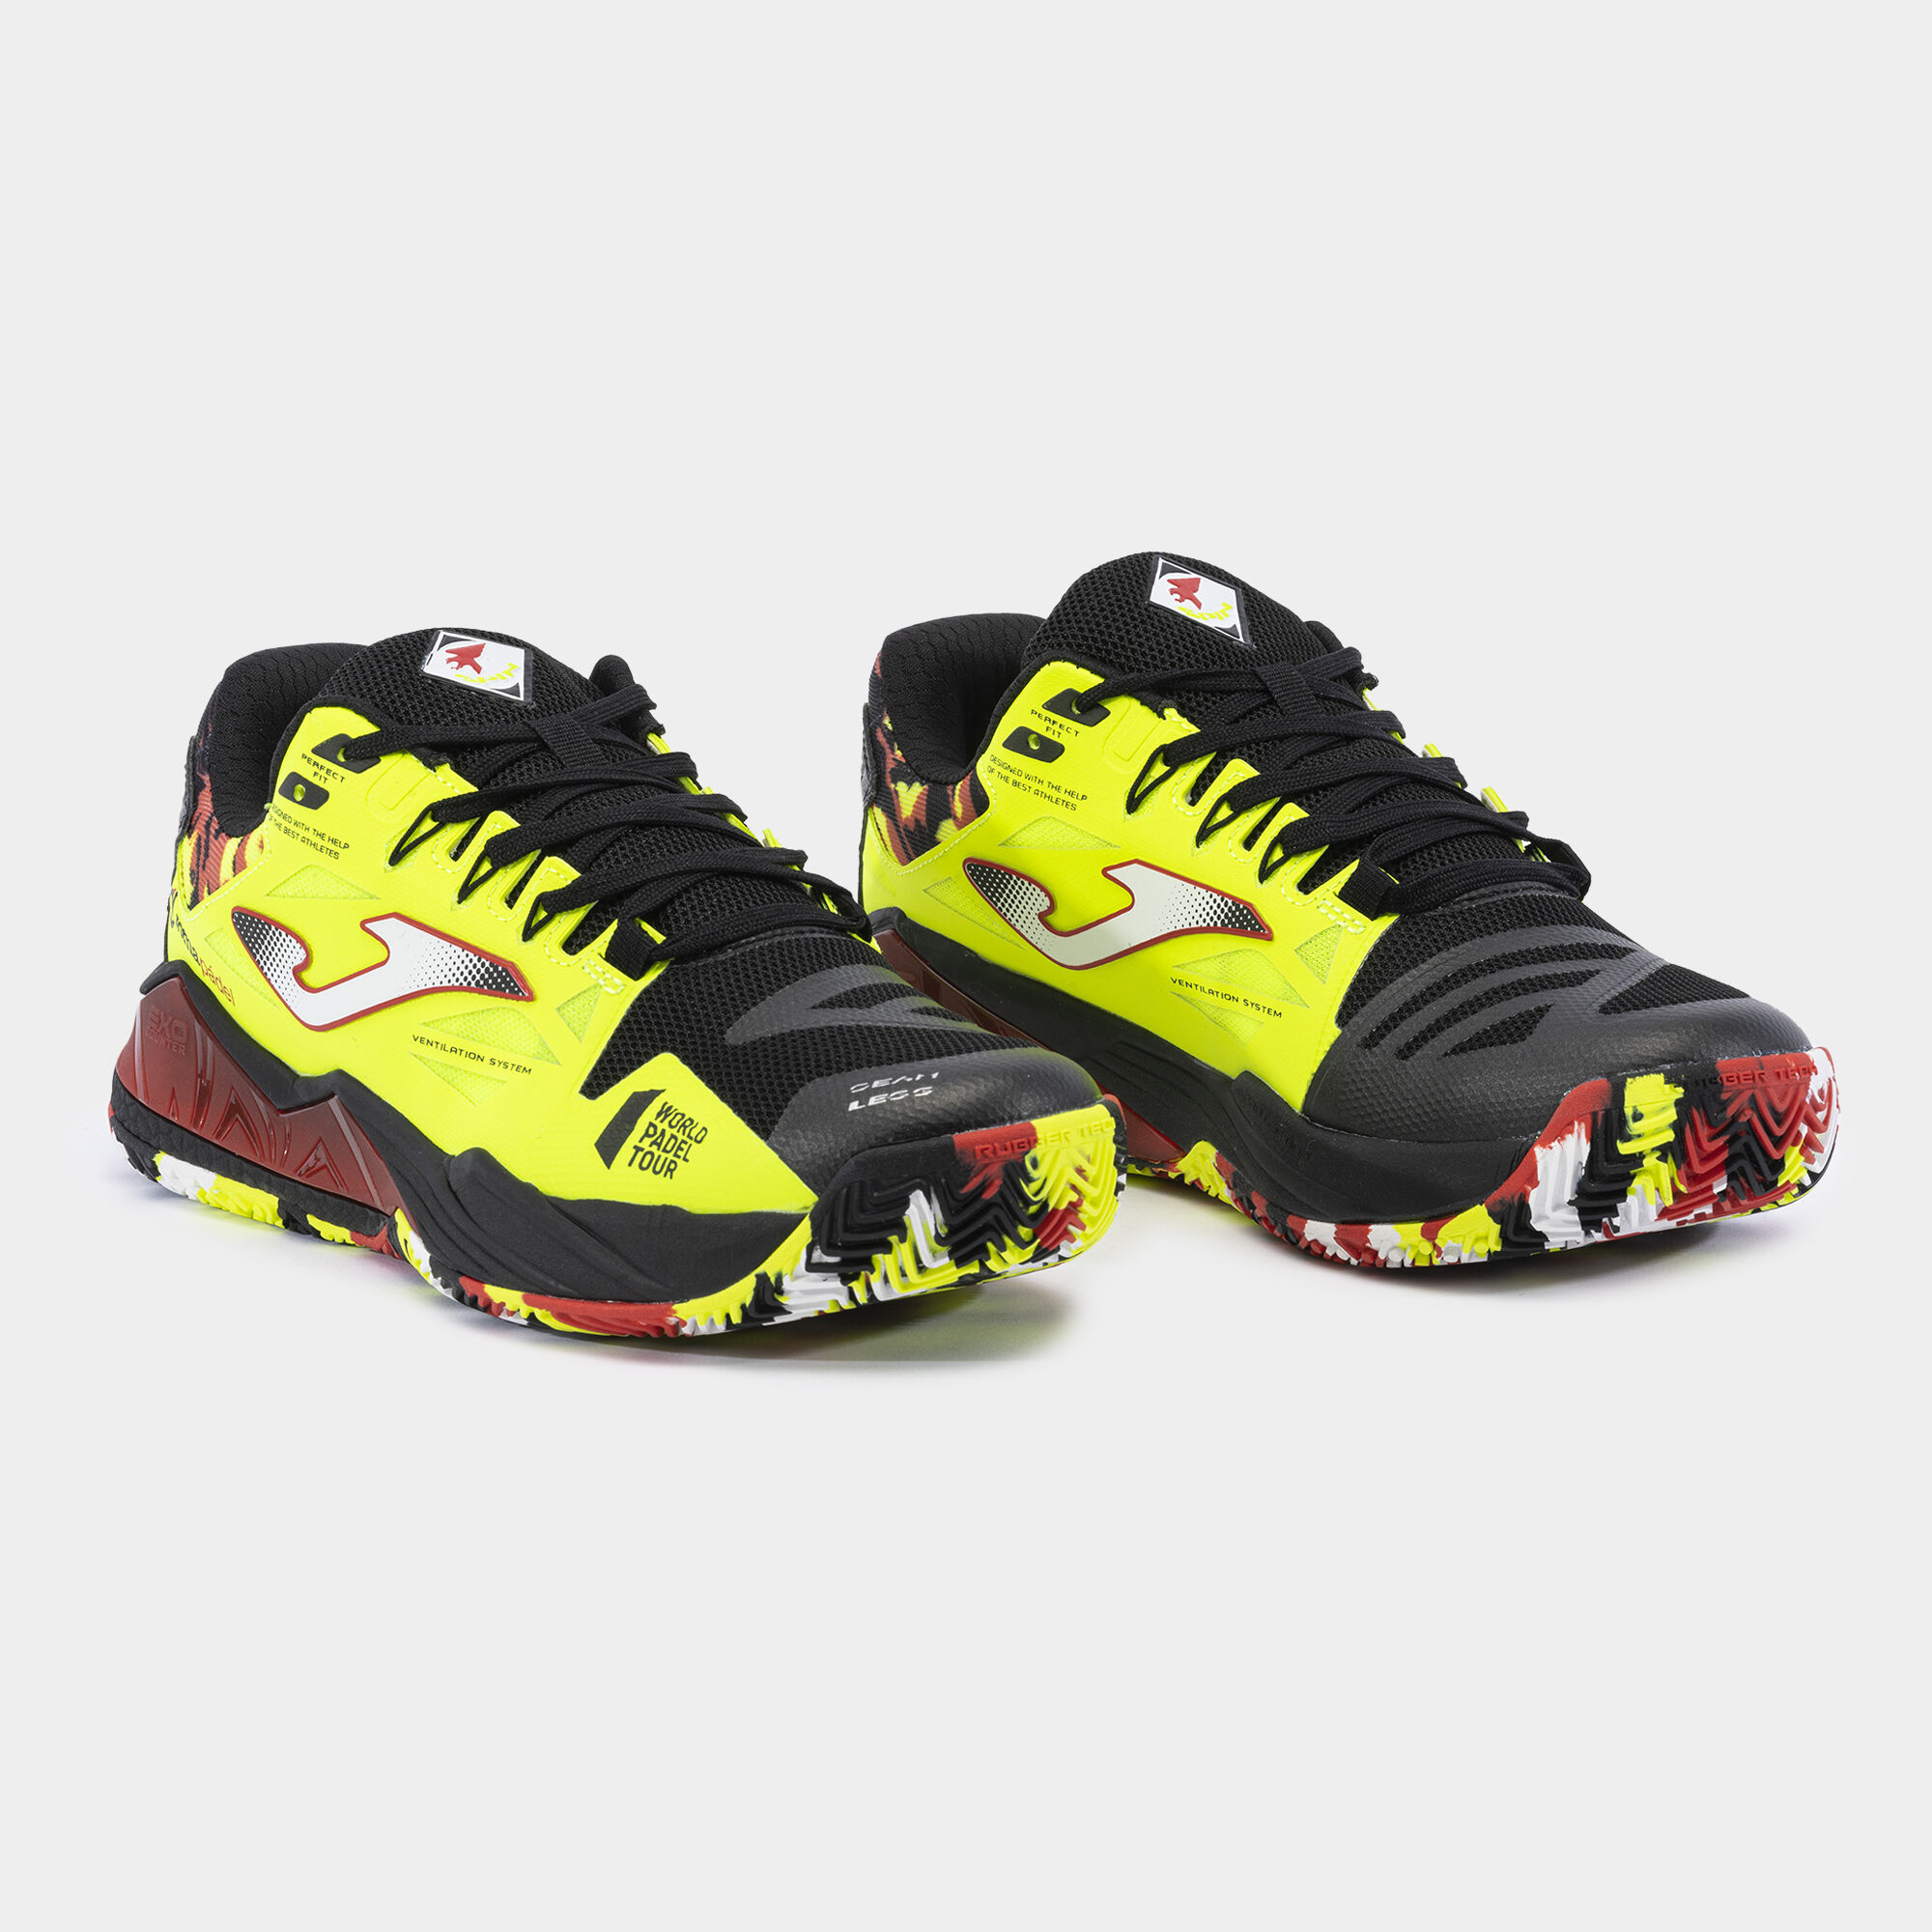 Pantofi sport T.Spin 23 clay bărbaȚi negru galben fosforescent